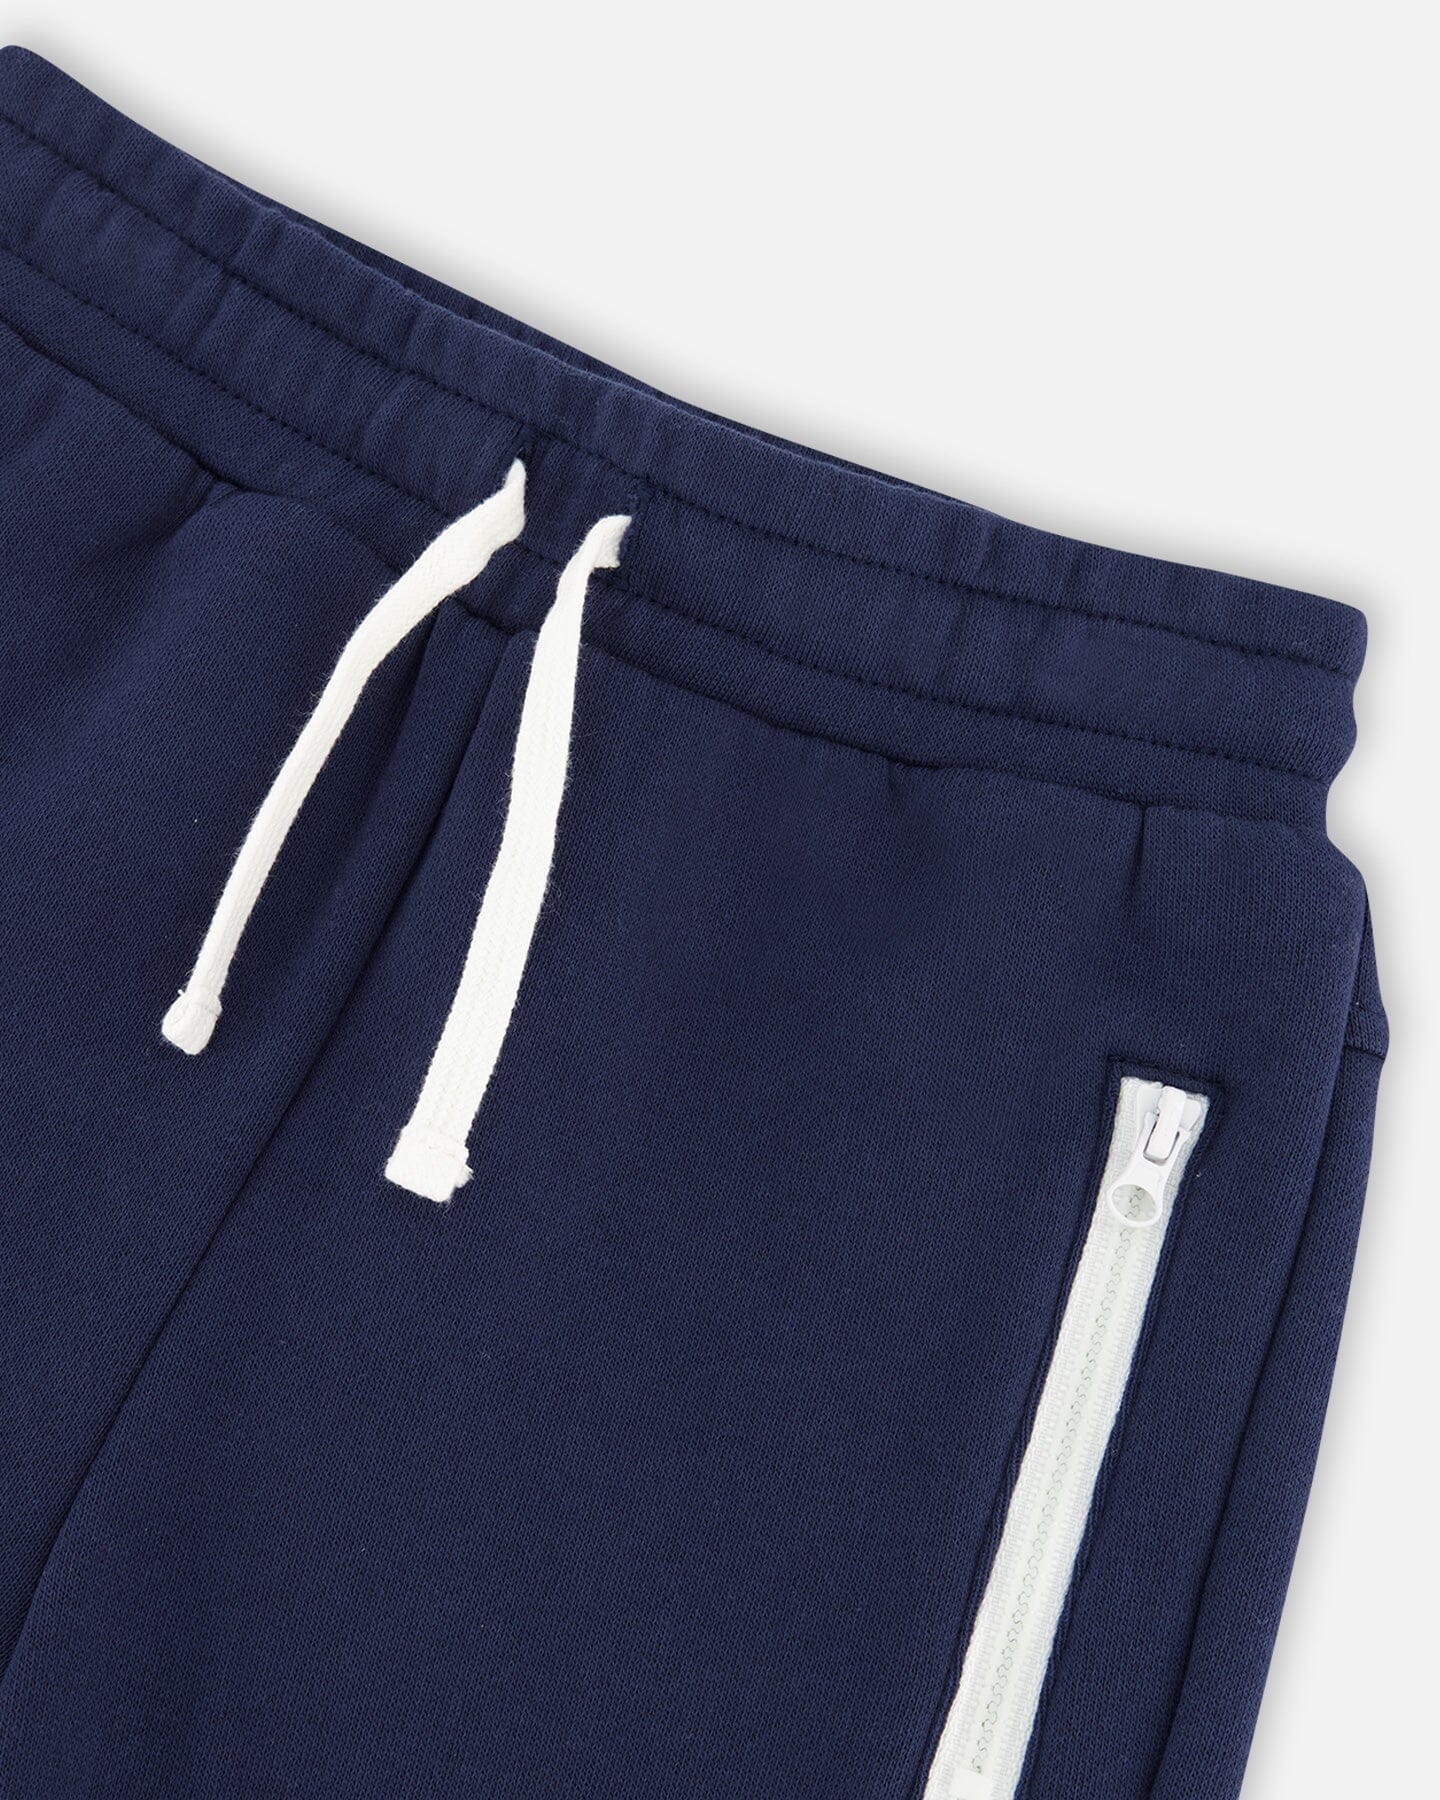 Fleece Sweatpants With Zipper Pockets Navy - F20U21_499